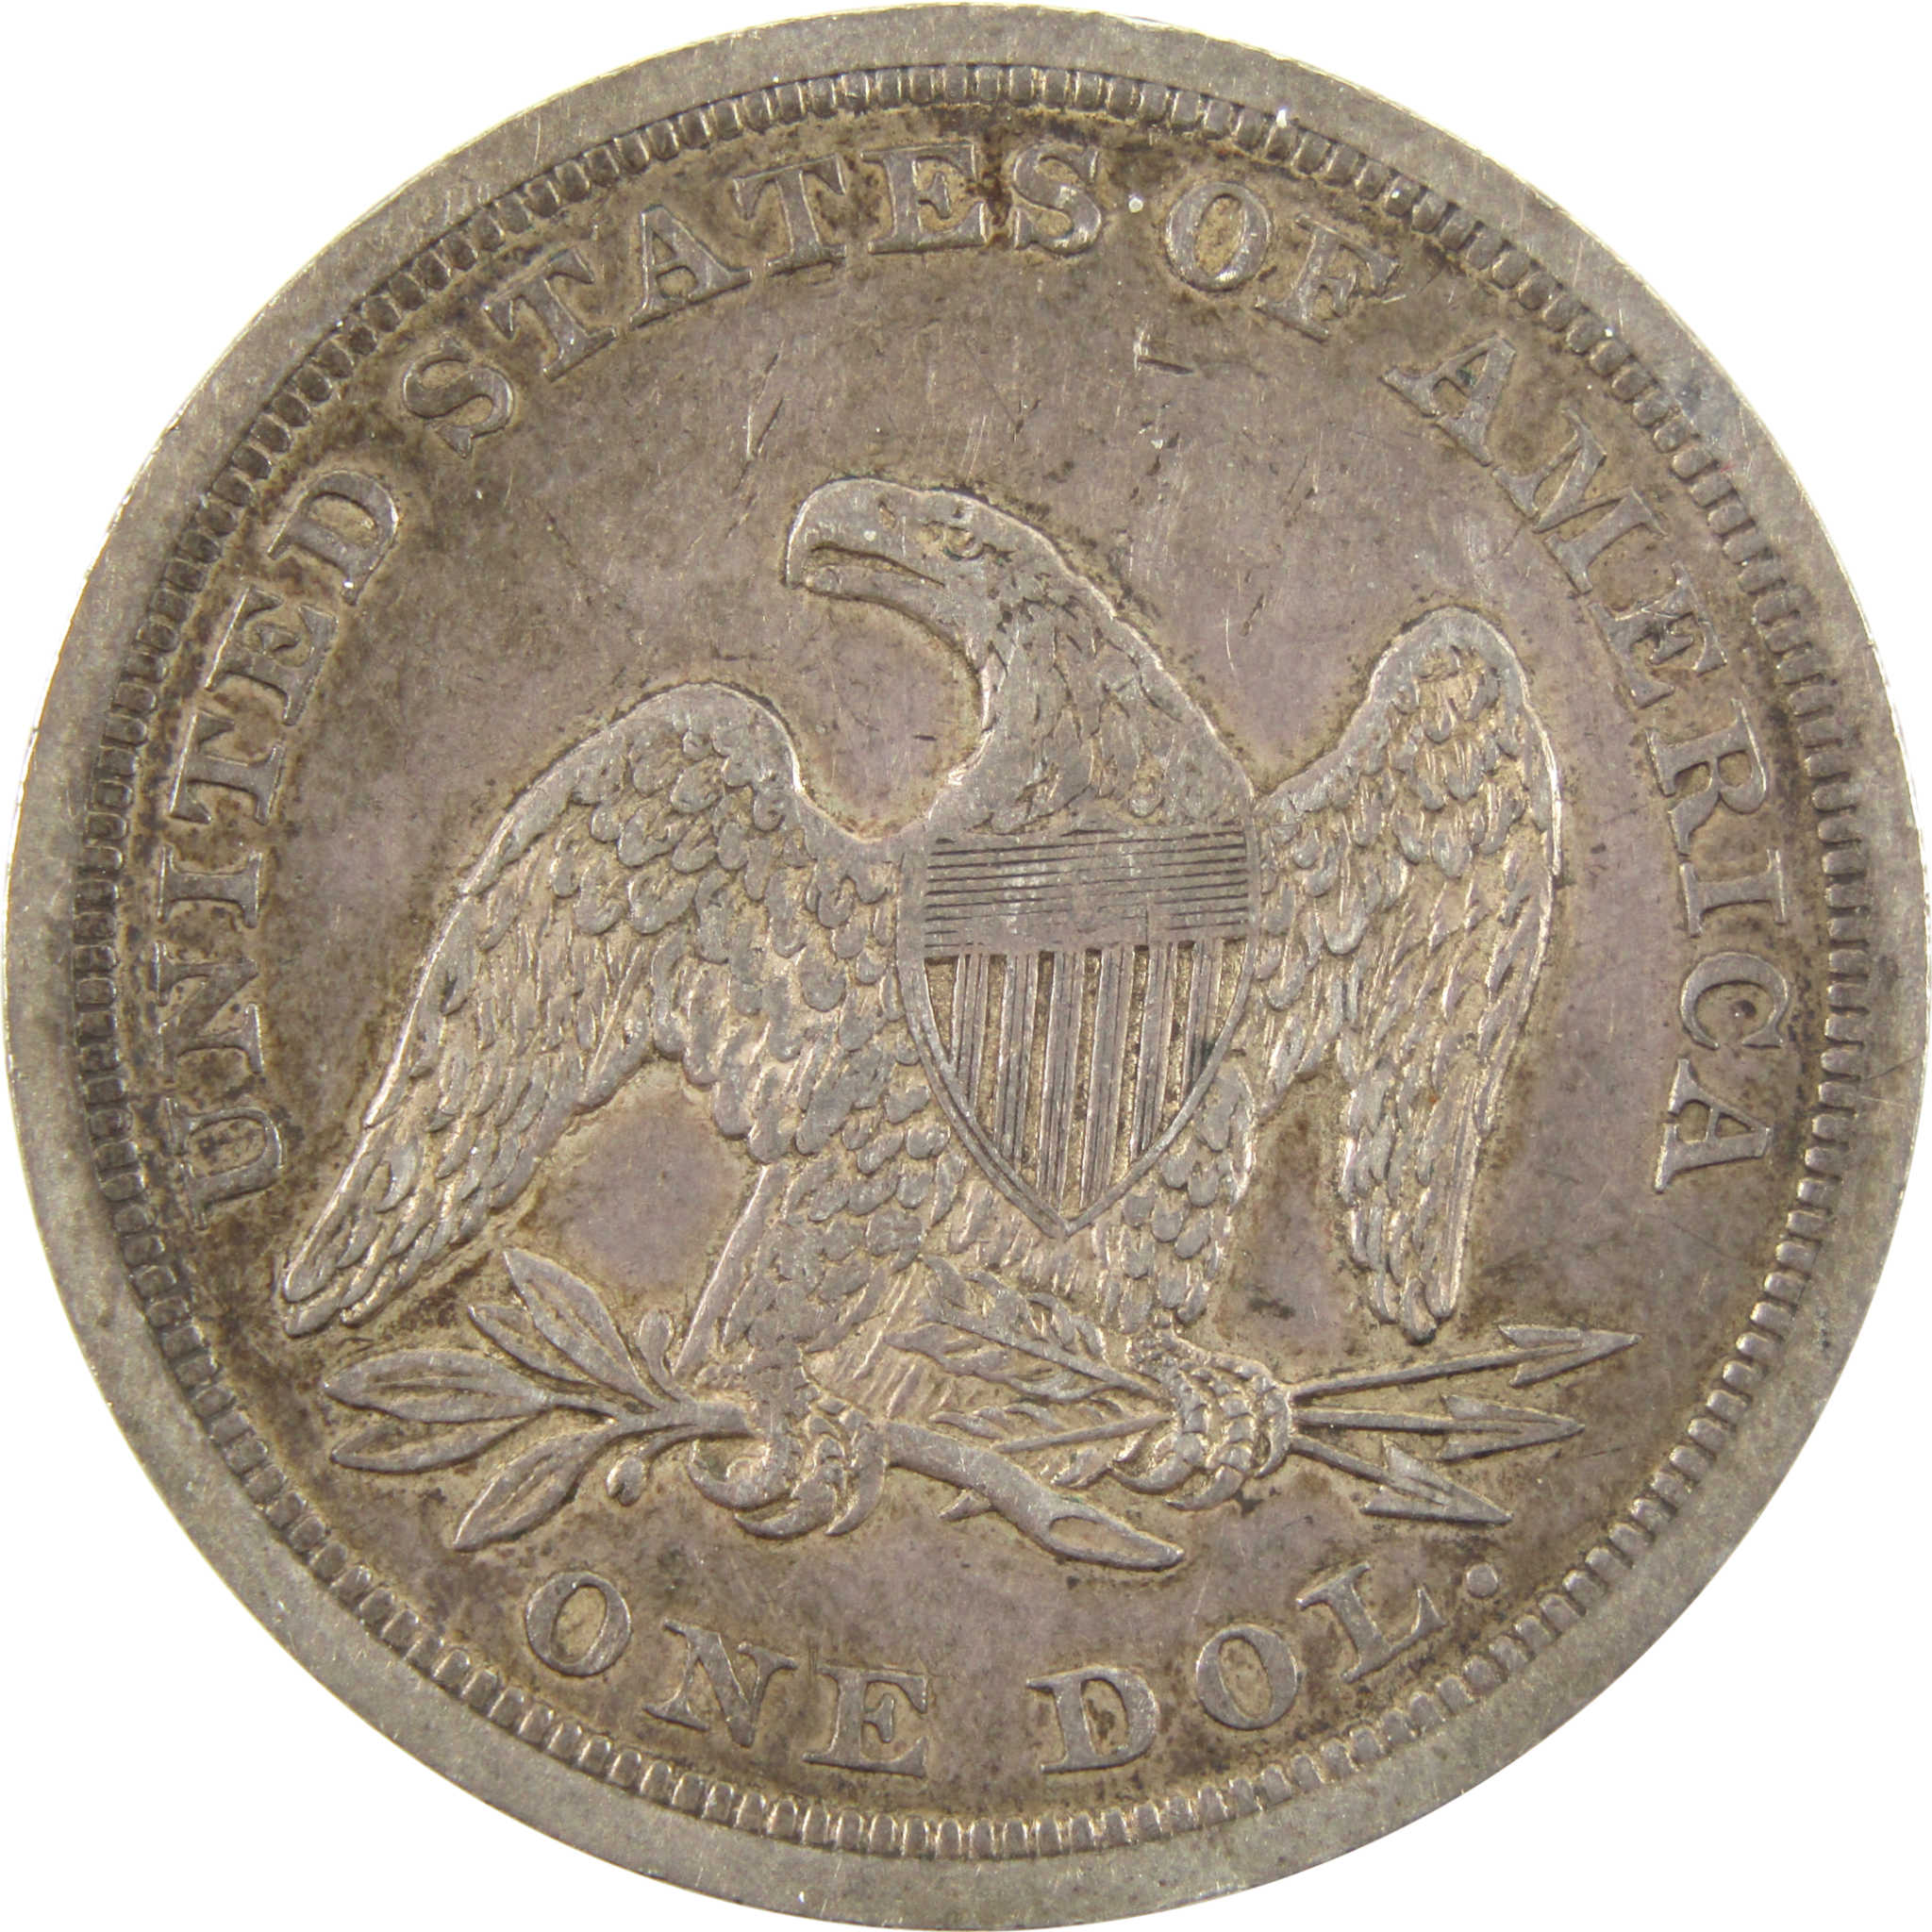 1842 Seated Liberty Dollar XF EF Details 90% Silver $1 SKU:I10624